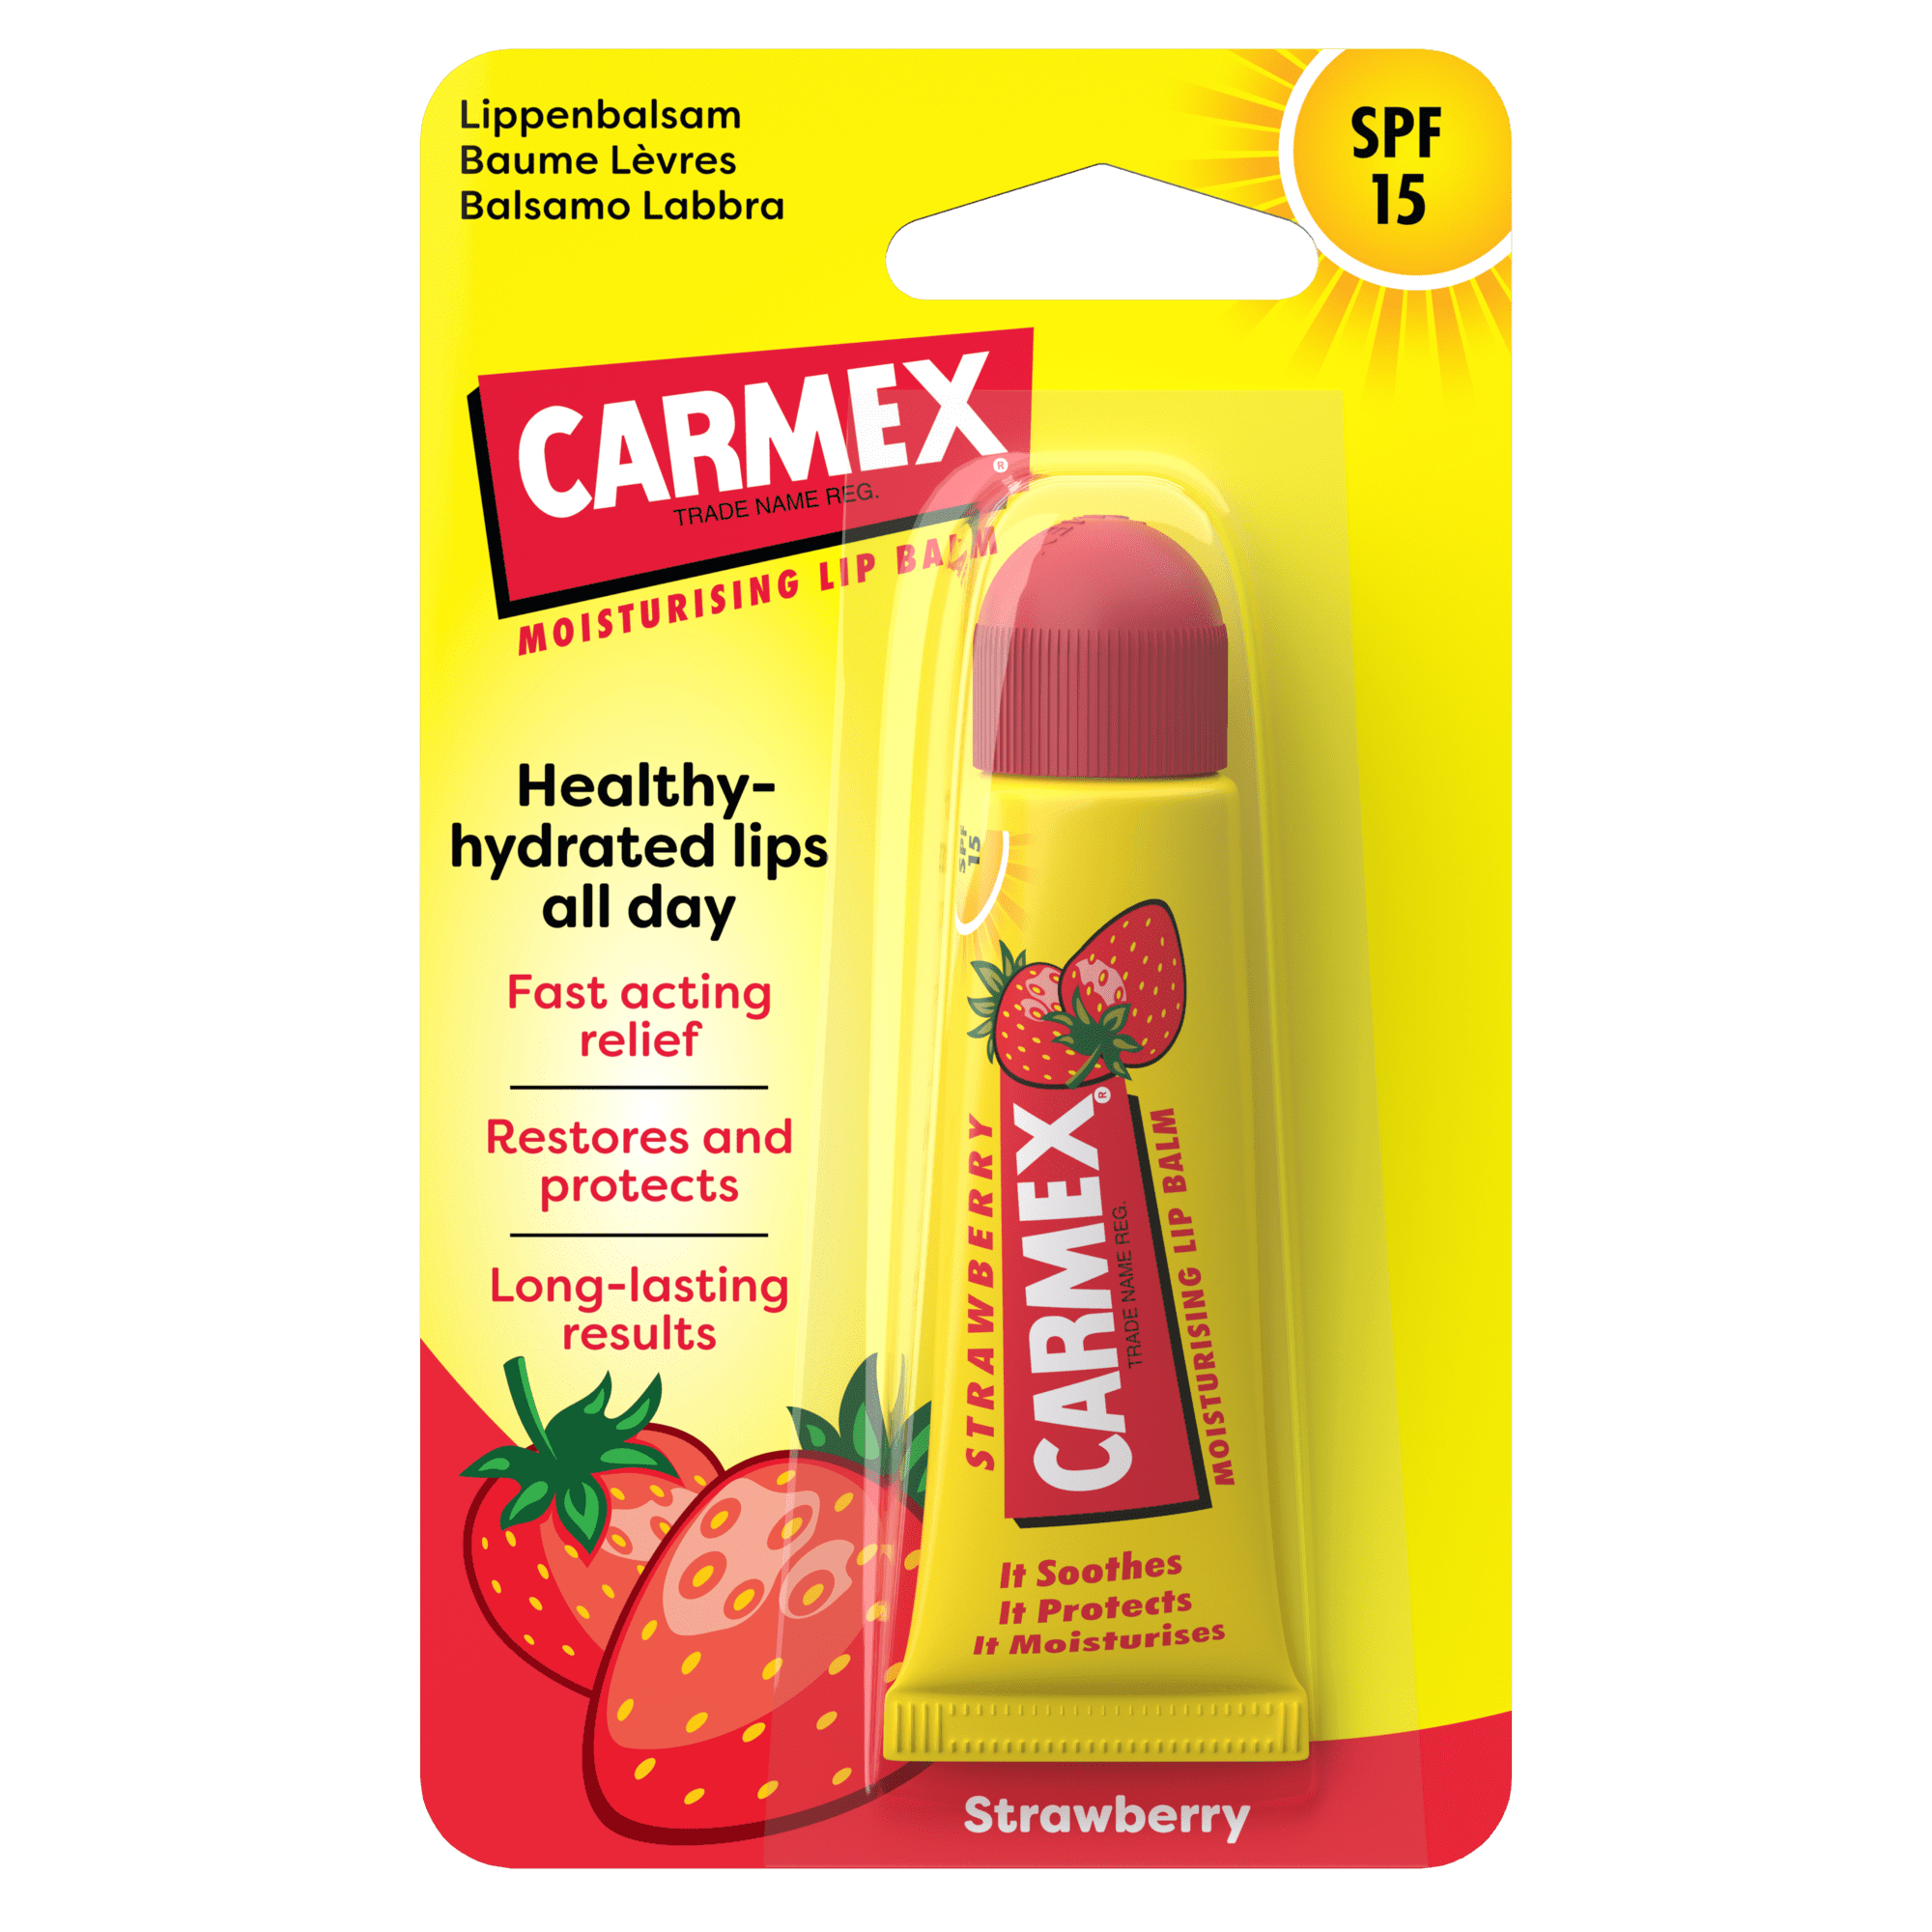 CARMEX Strawberry Tube Lippenbalsam - CARMEX Switzerland